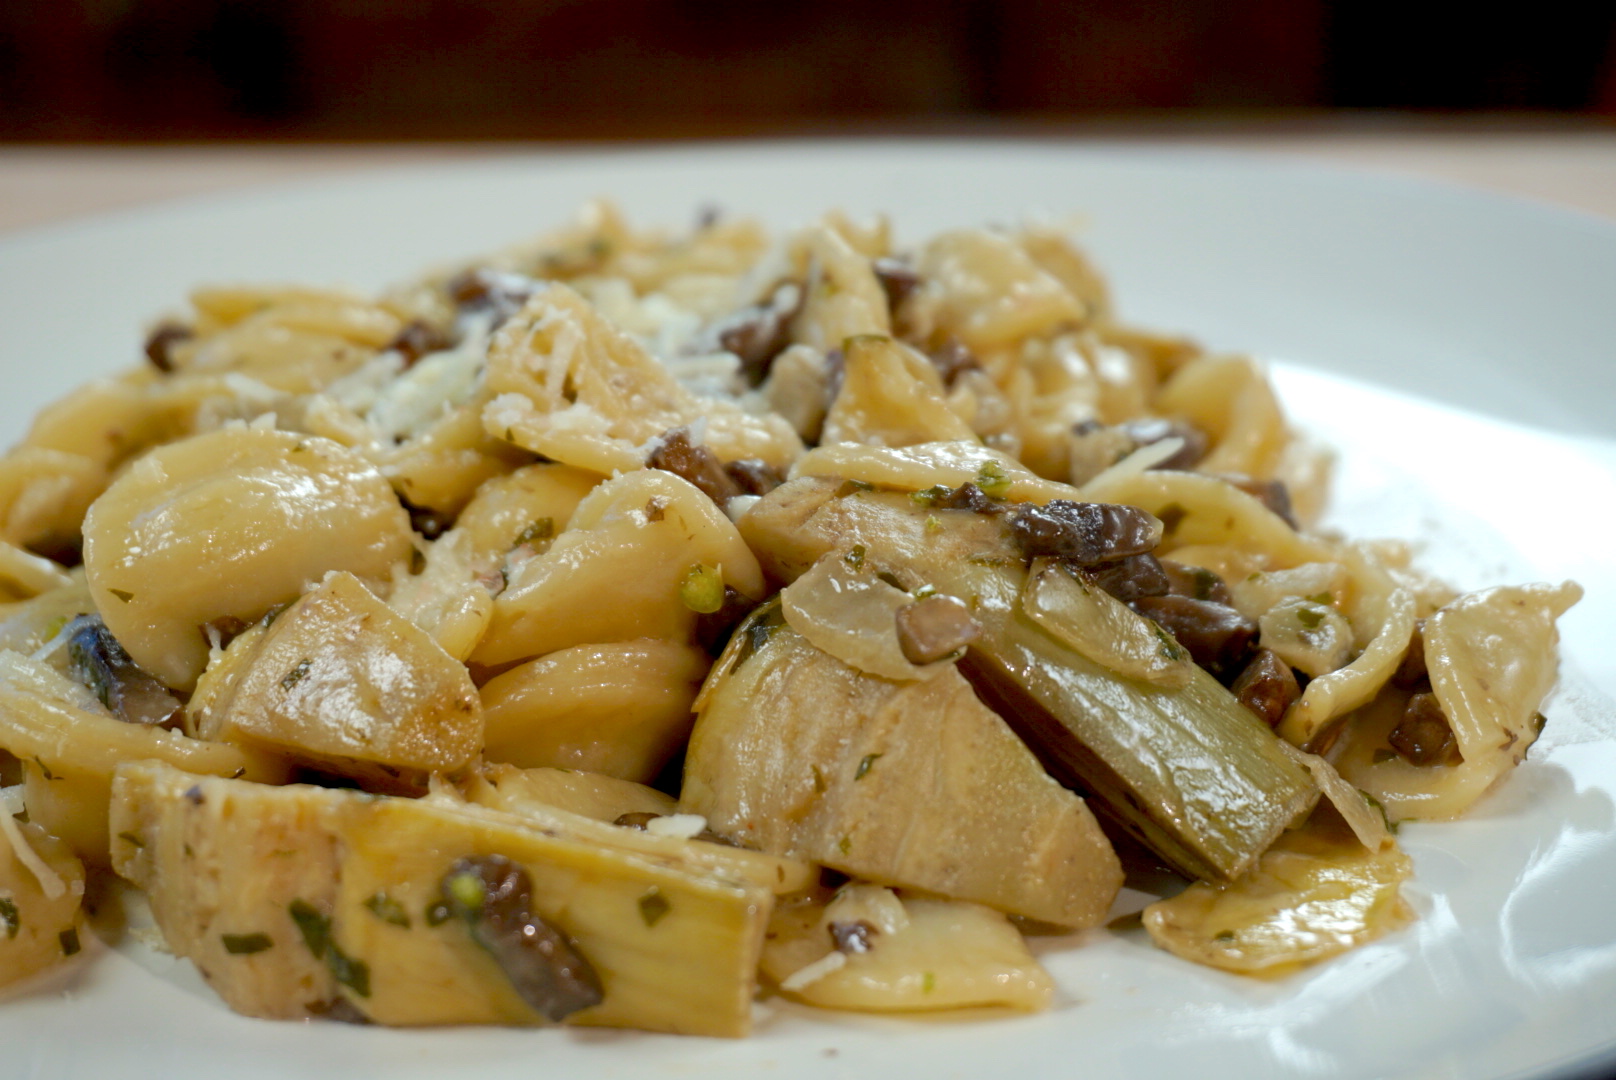 Mushroom And Artichoke Pasta With Marsala Wine Sauce for dinner